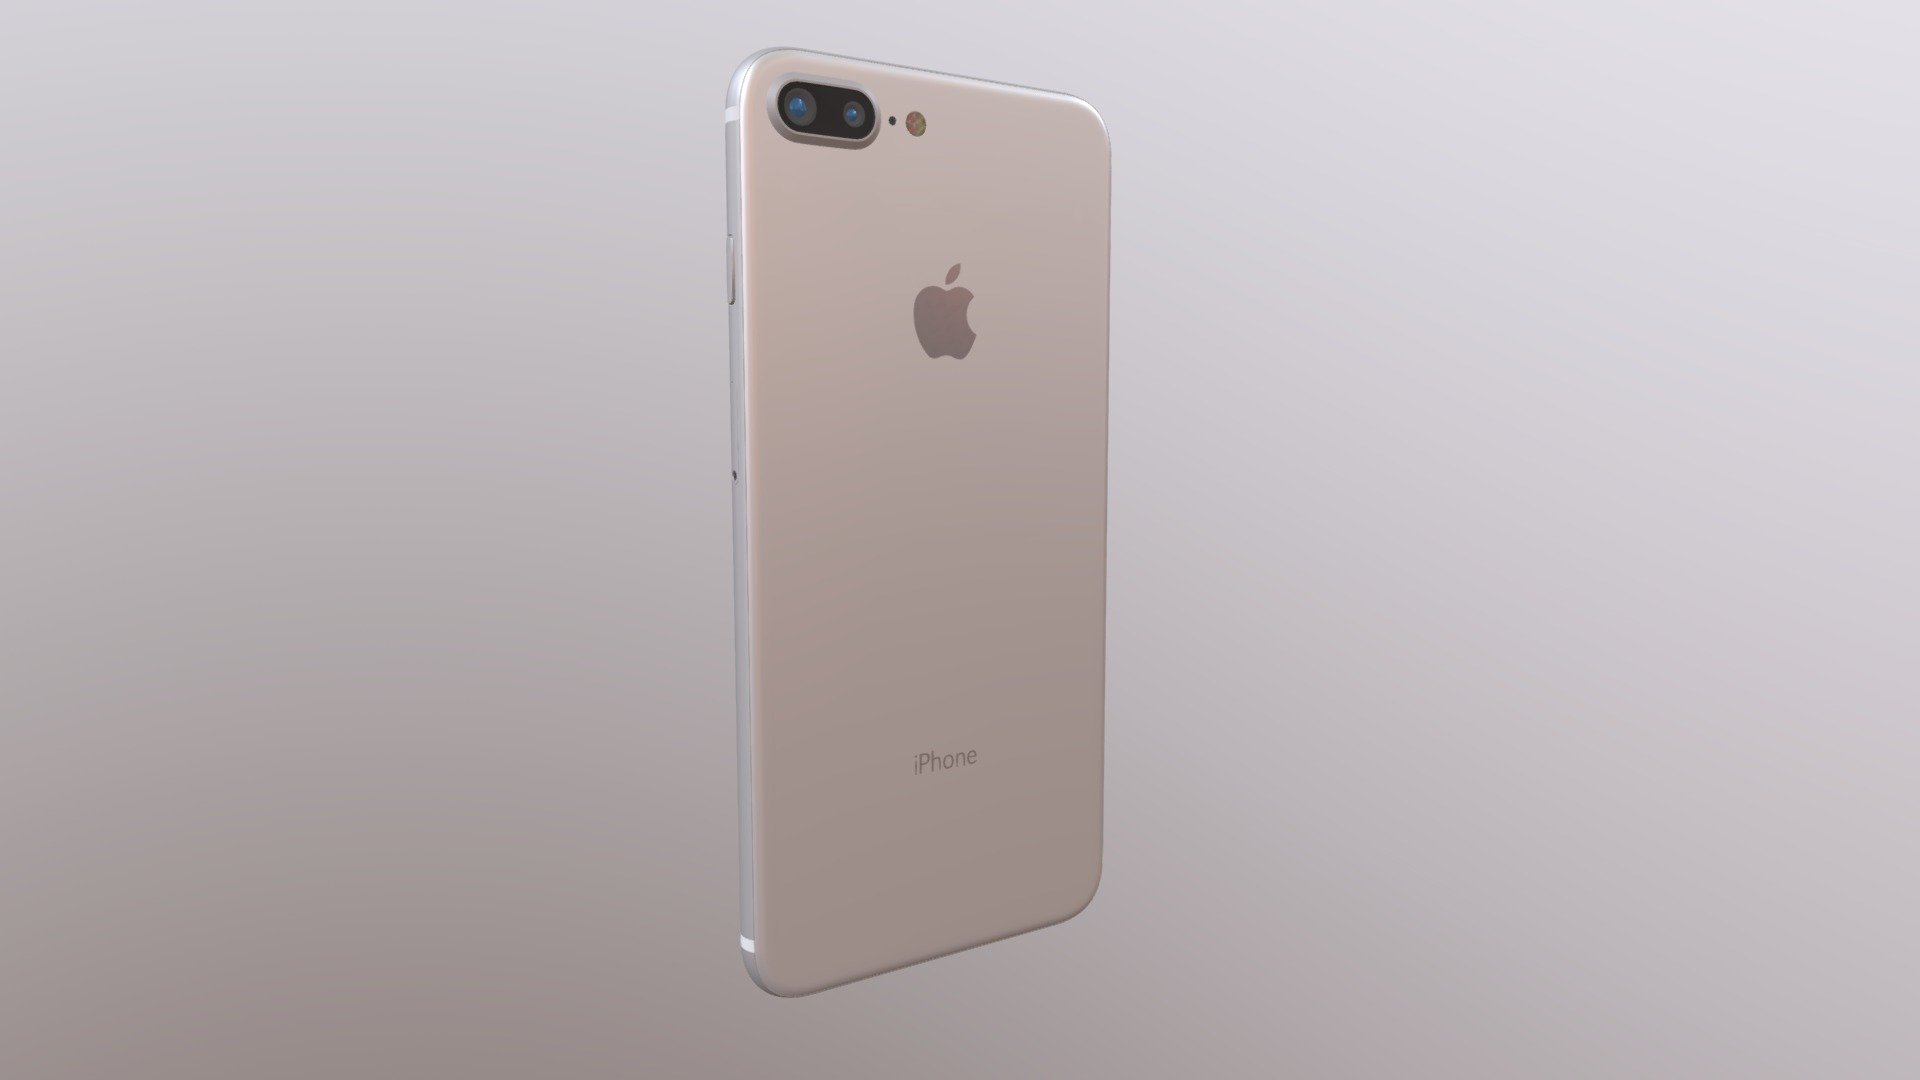 Apple iPhone 8 3d Model
 - iPhone 8 Plus Silver 3D Model - Buy Royalty Free 3D model by UMURdesign 3d model